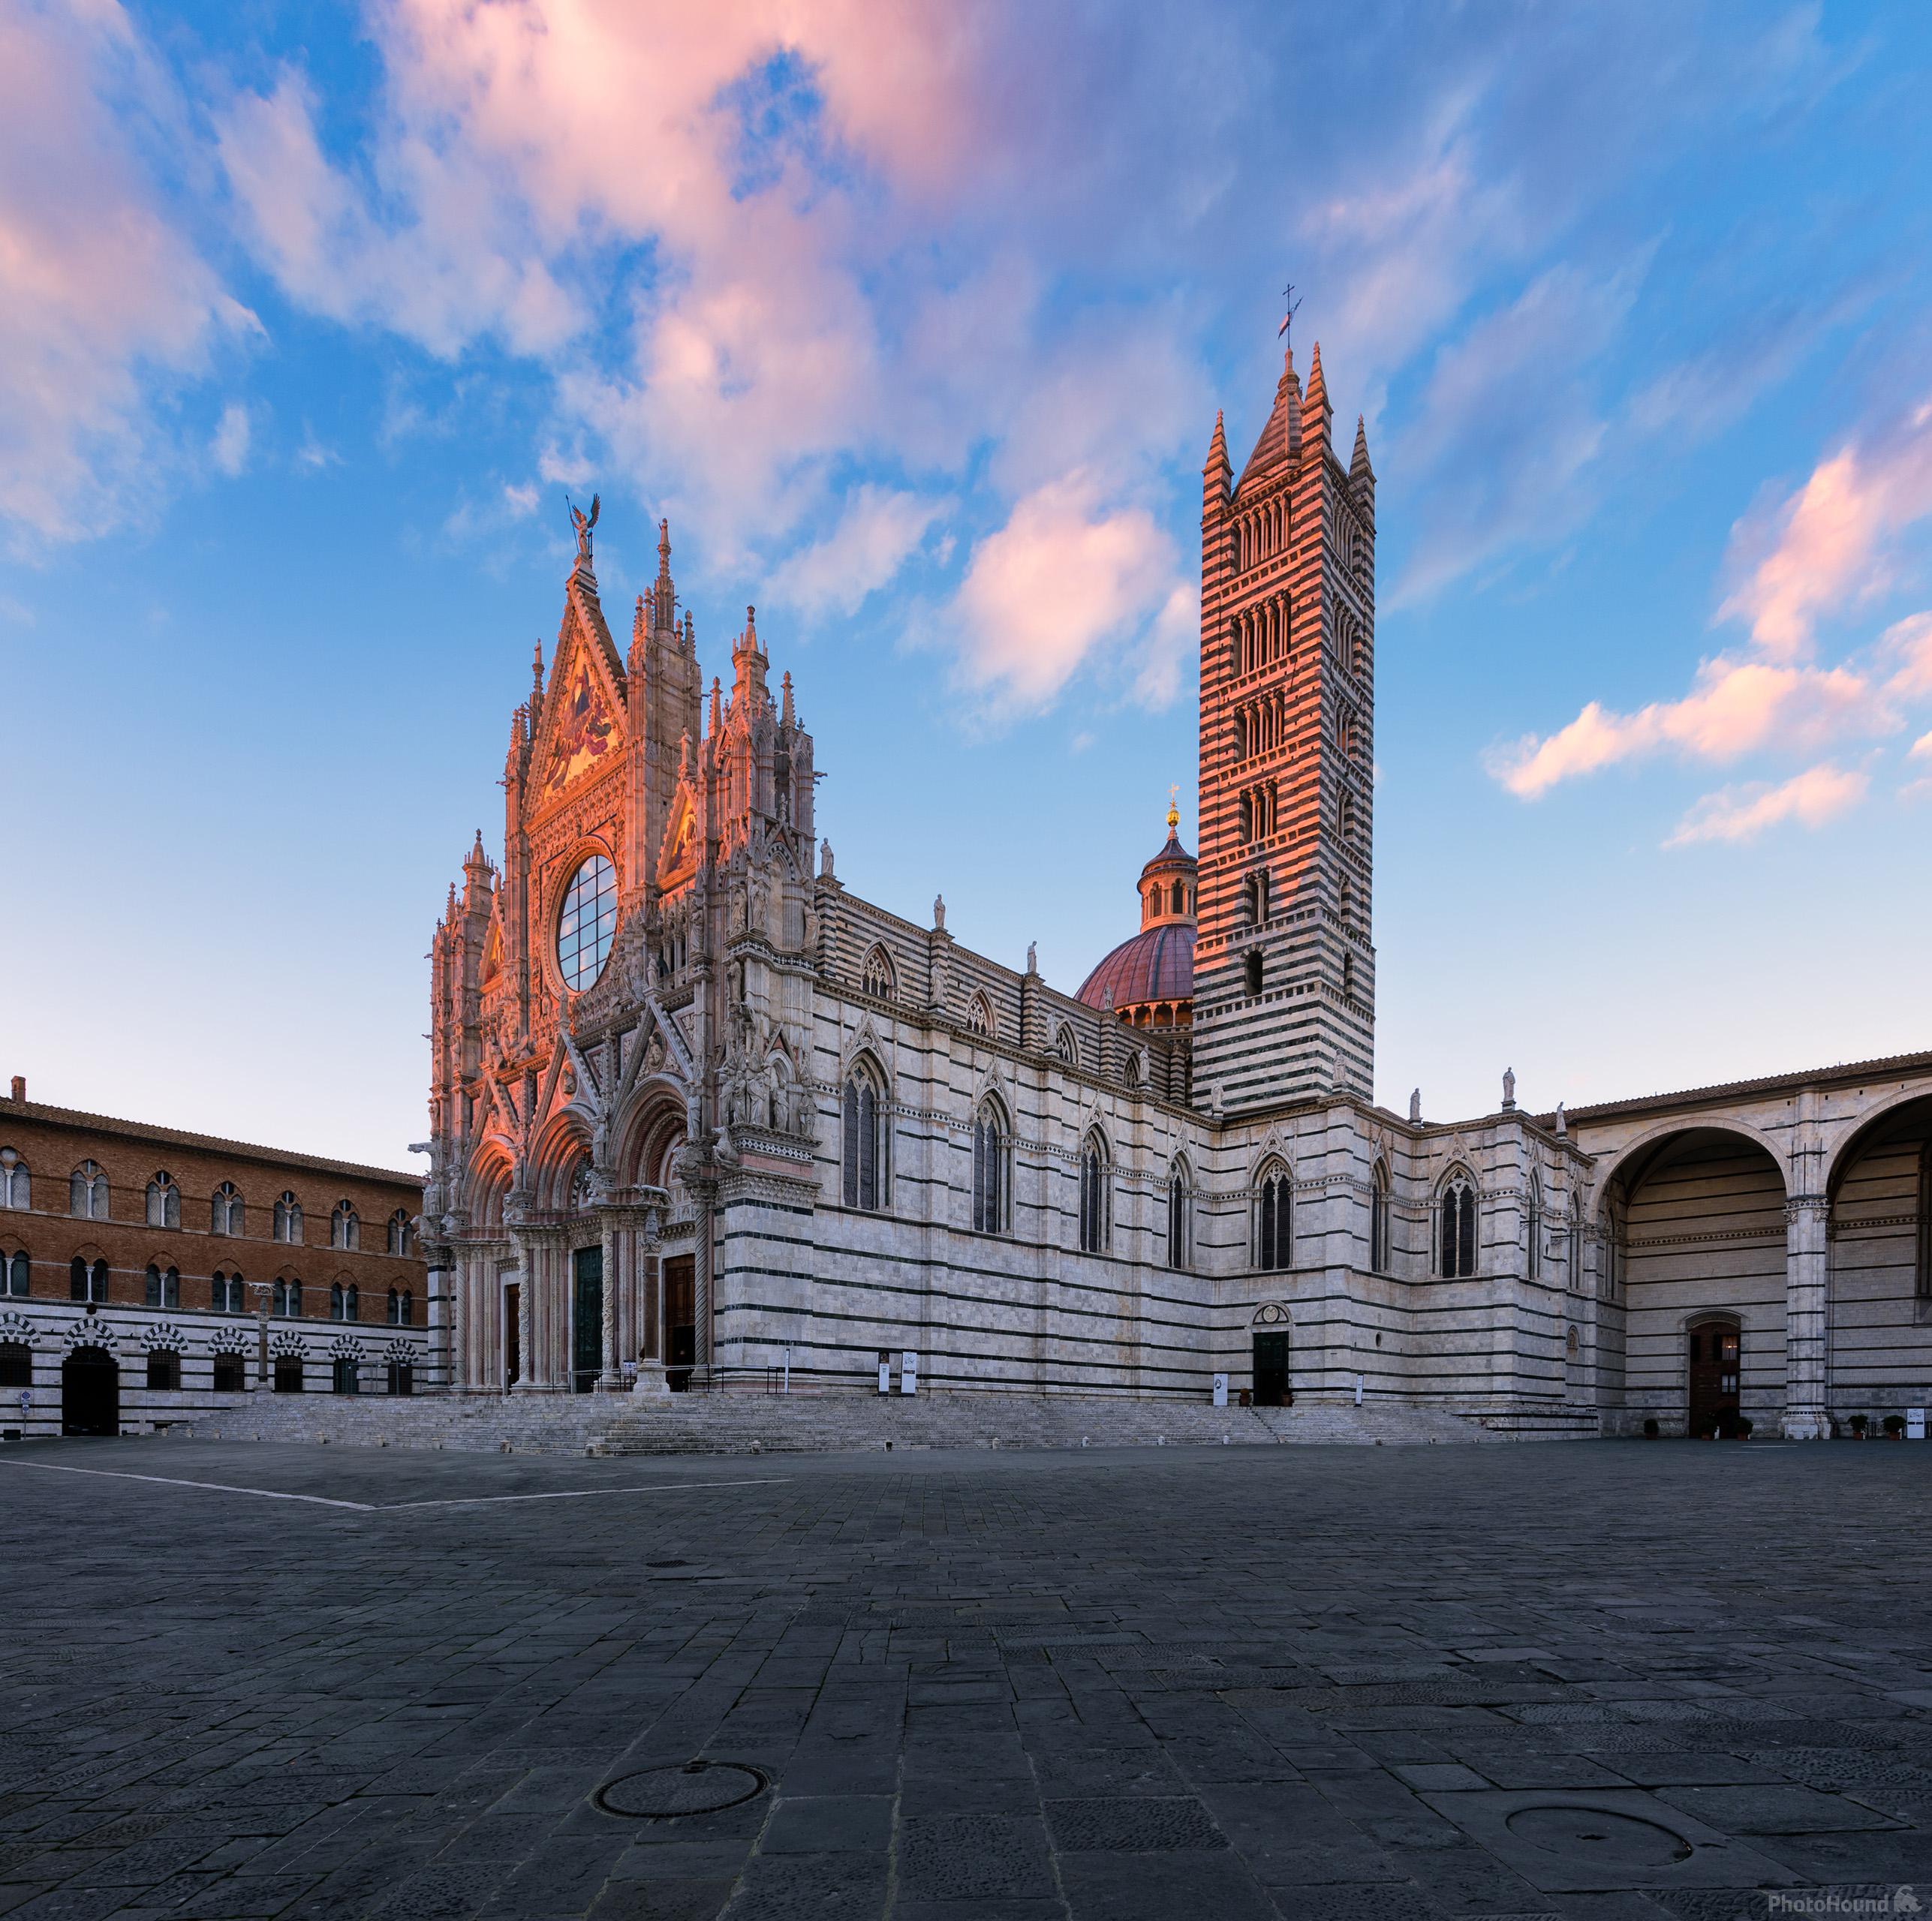 Image of Piazza del Duomo by Luka Esenko